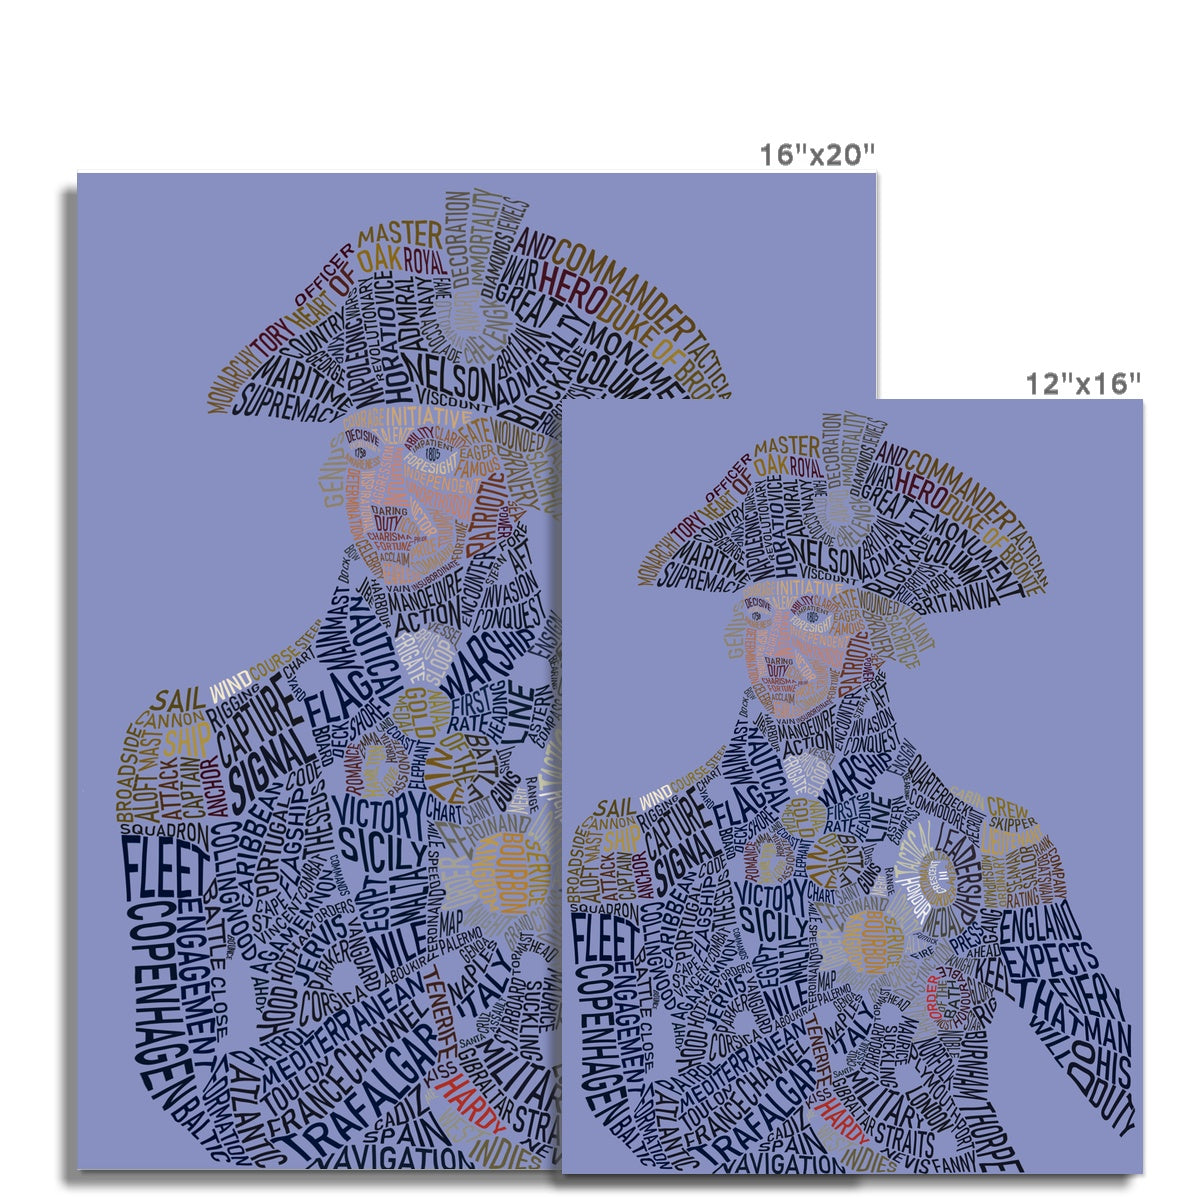 Admiral Horatio Nelson Text Art Print - Napoleonic Impressions